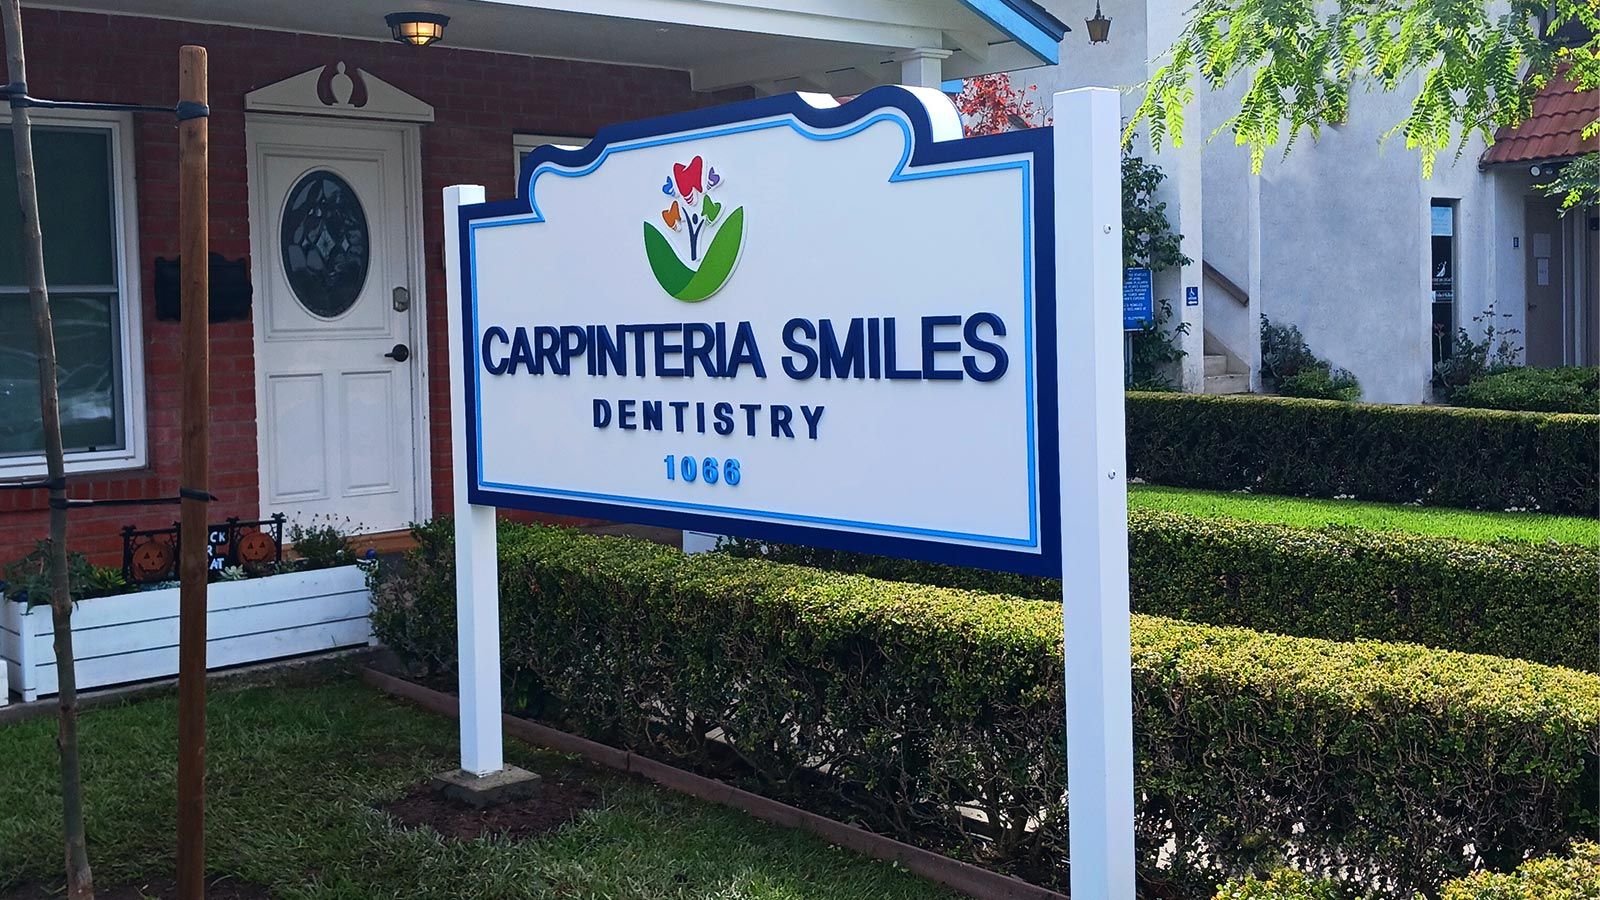 Carpinteria Smiles Dentistry monumental medical office sign